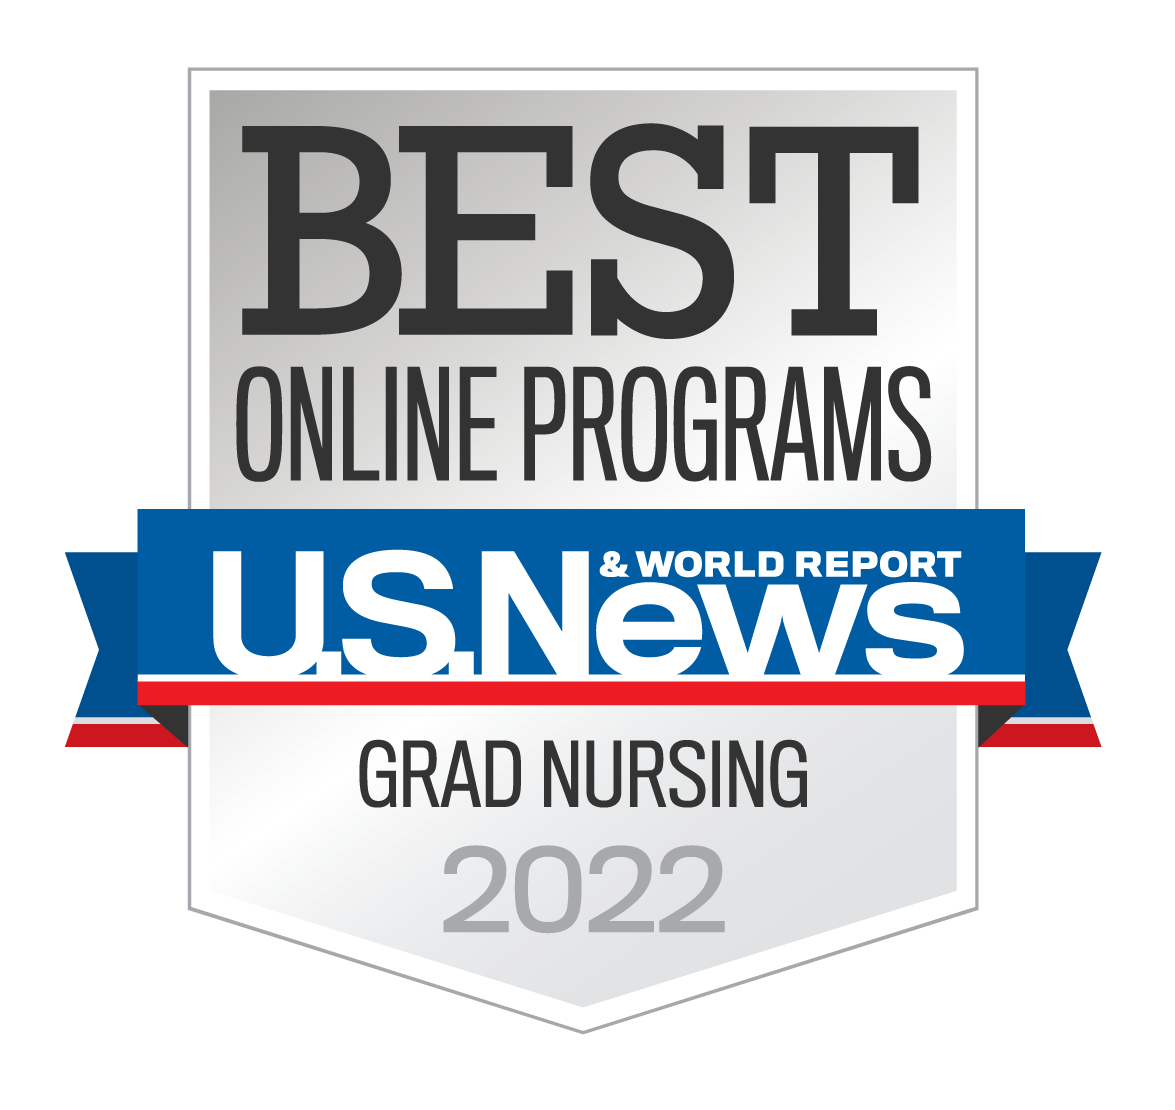 U.S. News and World Report Best Grad Nursing